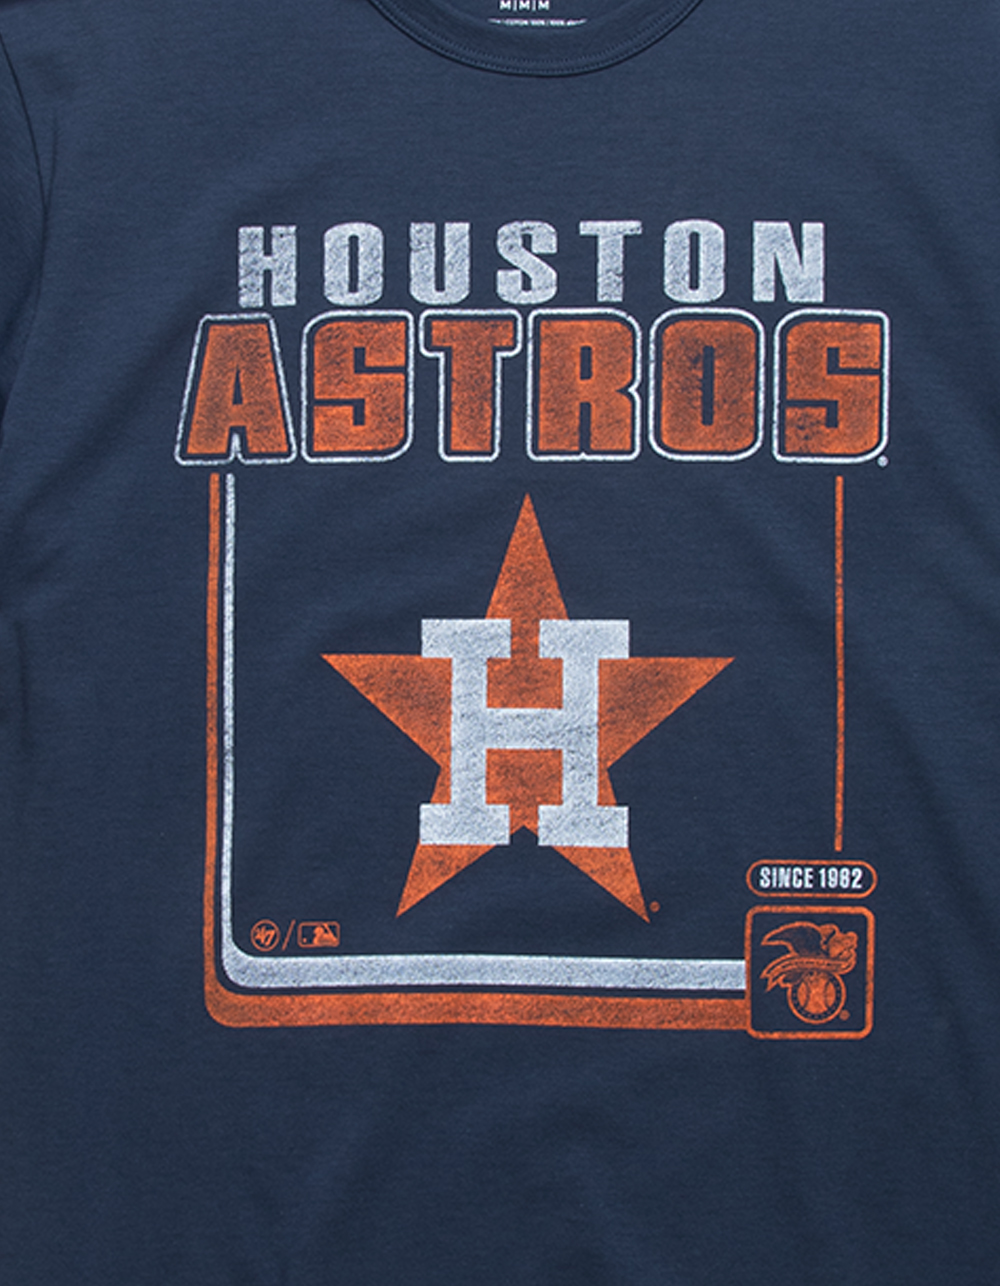 Write a Review for Kids Houston Astros Baseball Cap Pocket T-Shirt